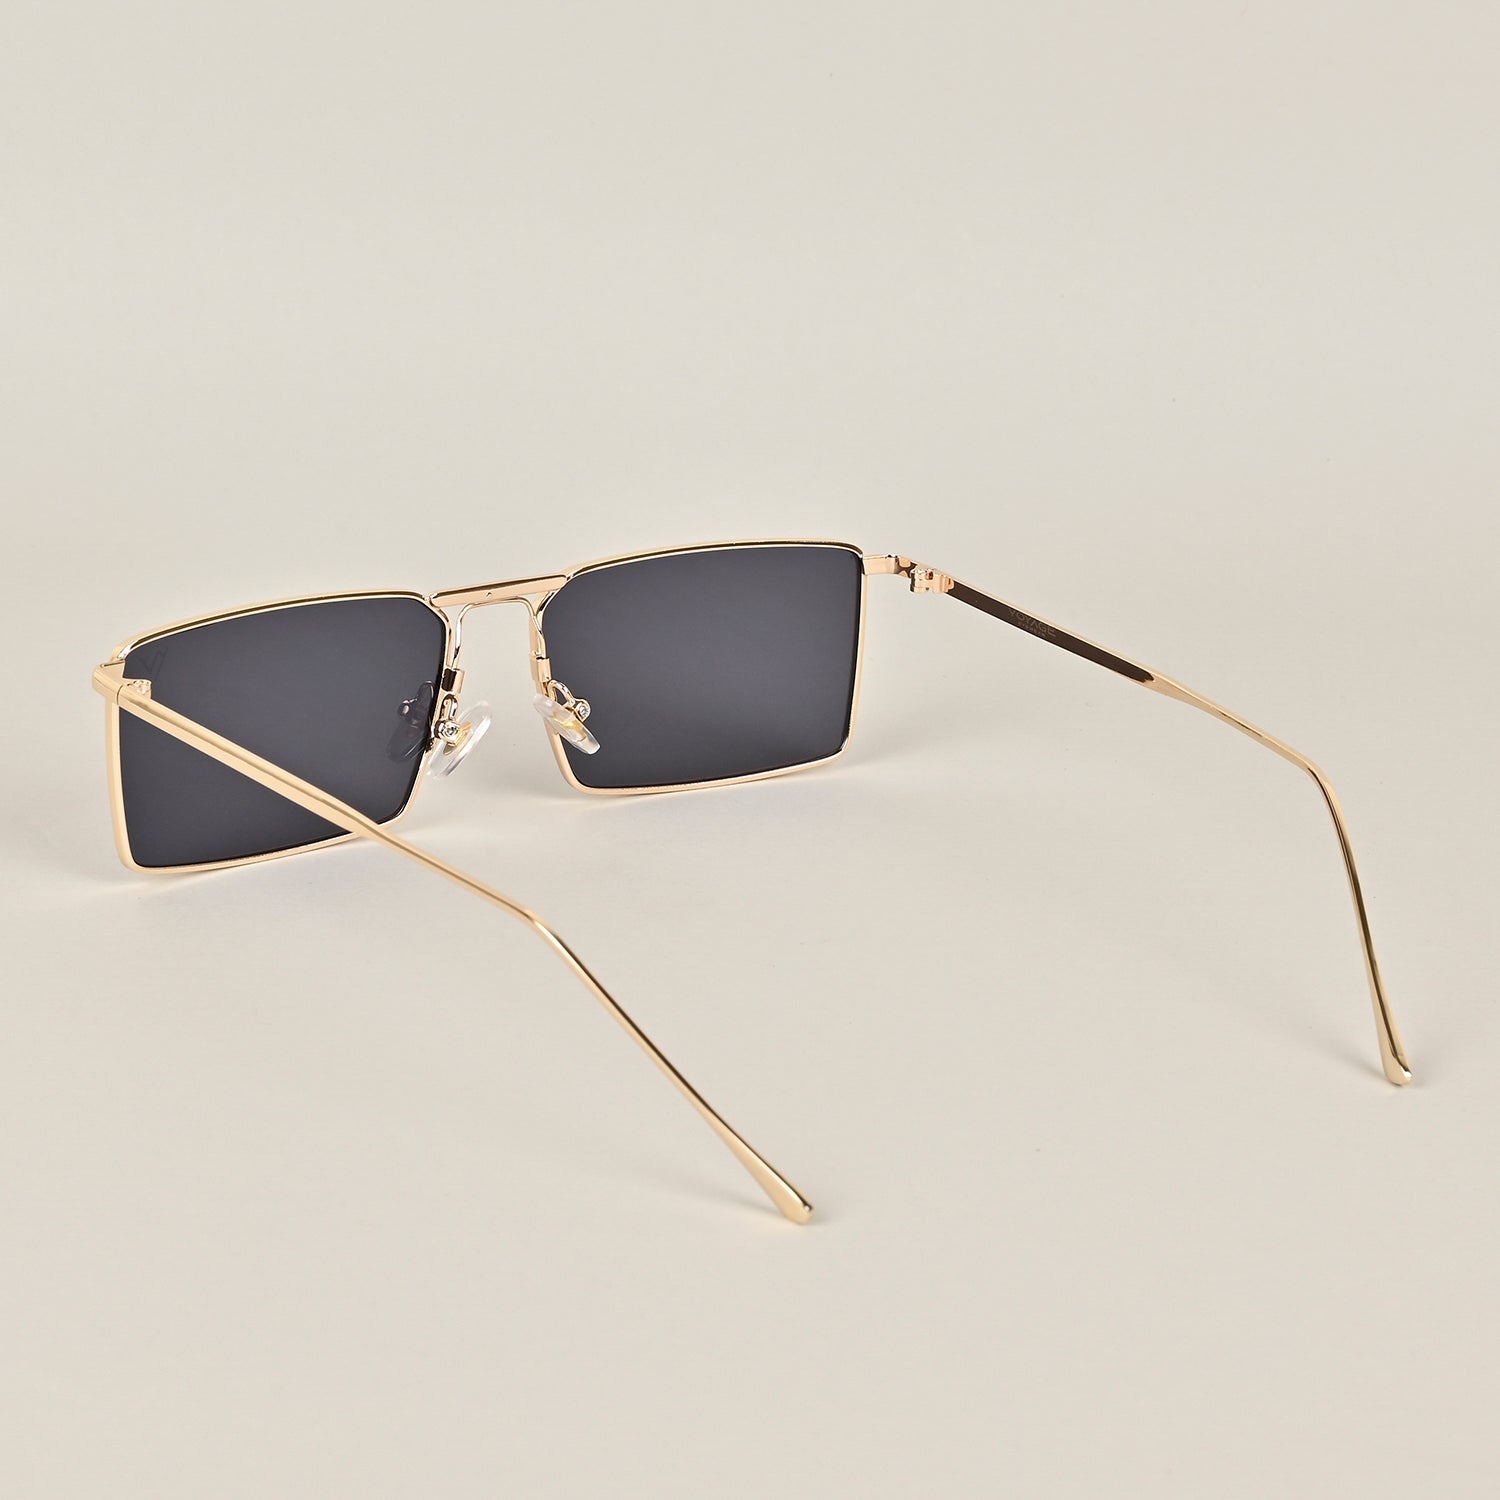 Voyage Black Gold Rectangular Sunglasses - MG3572